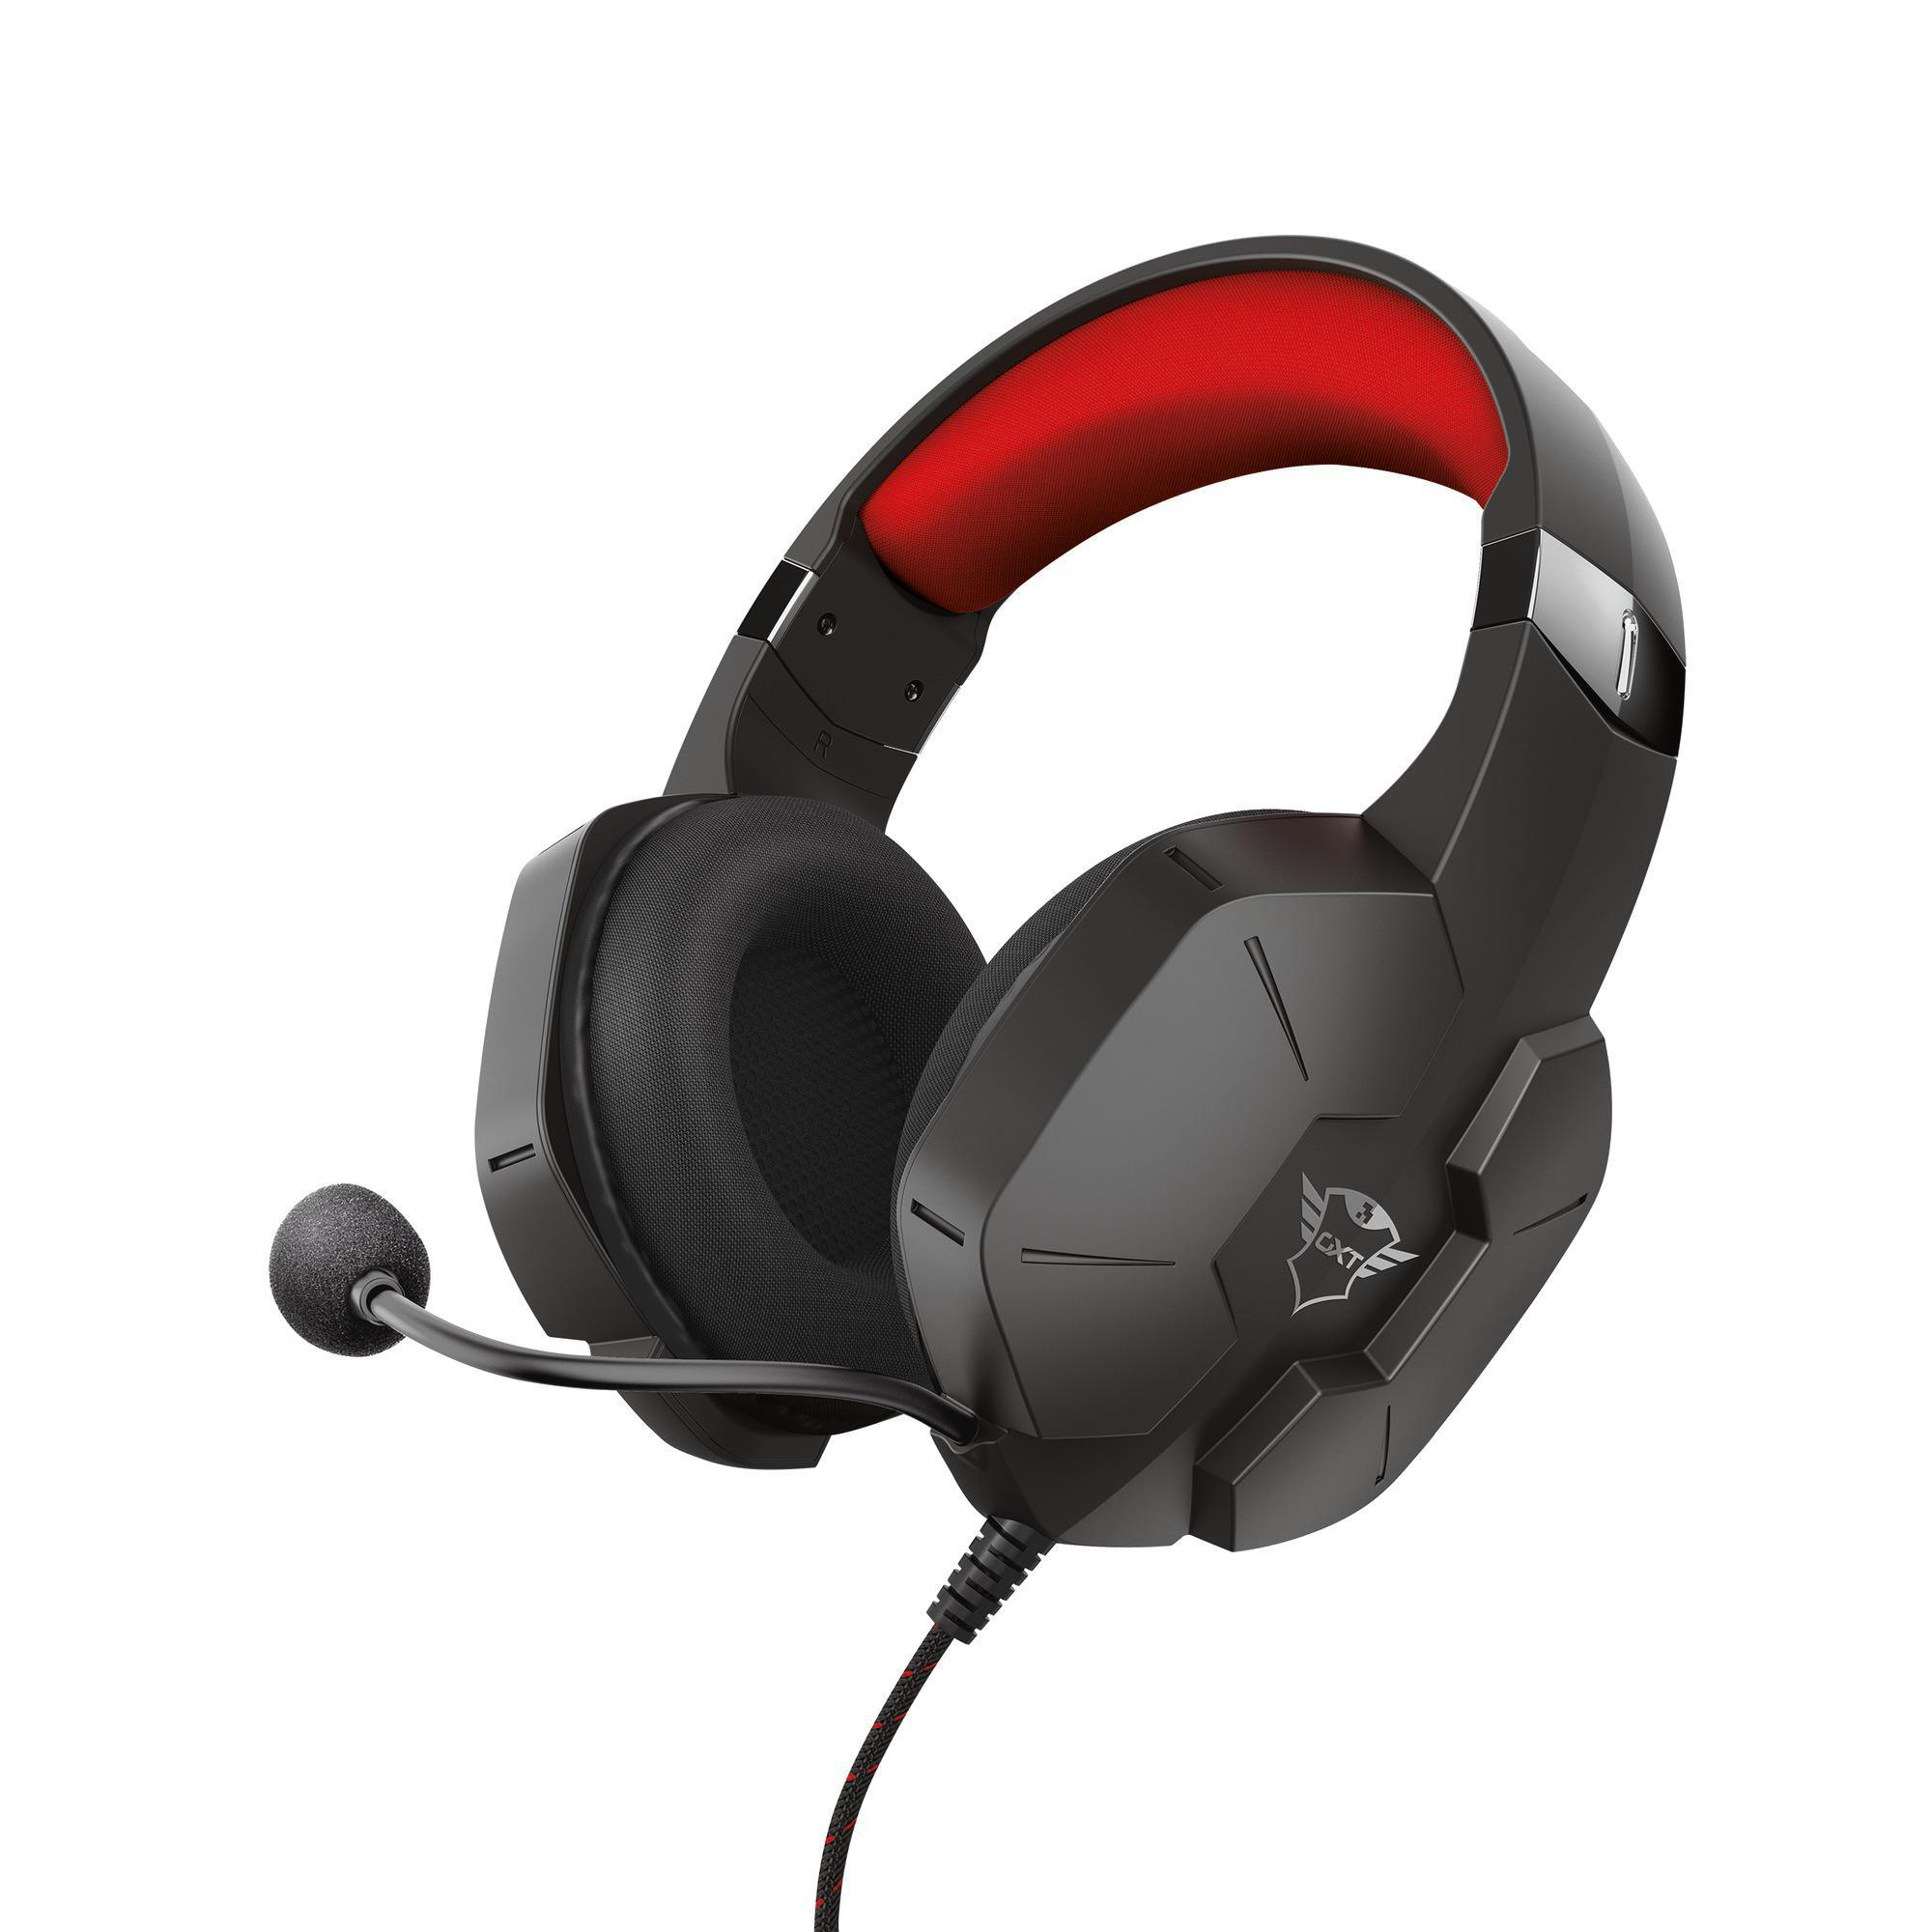 TRUST Headset - Carus GXT Gaming Xbox,PS4,PS5 für Schwarz 323 und Over-ear PC